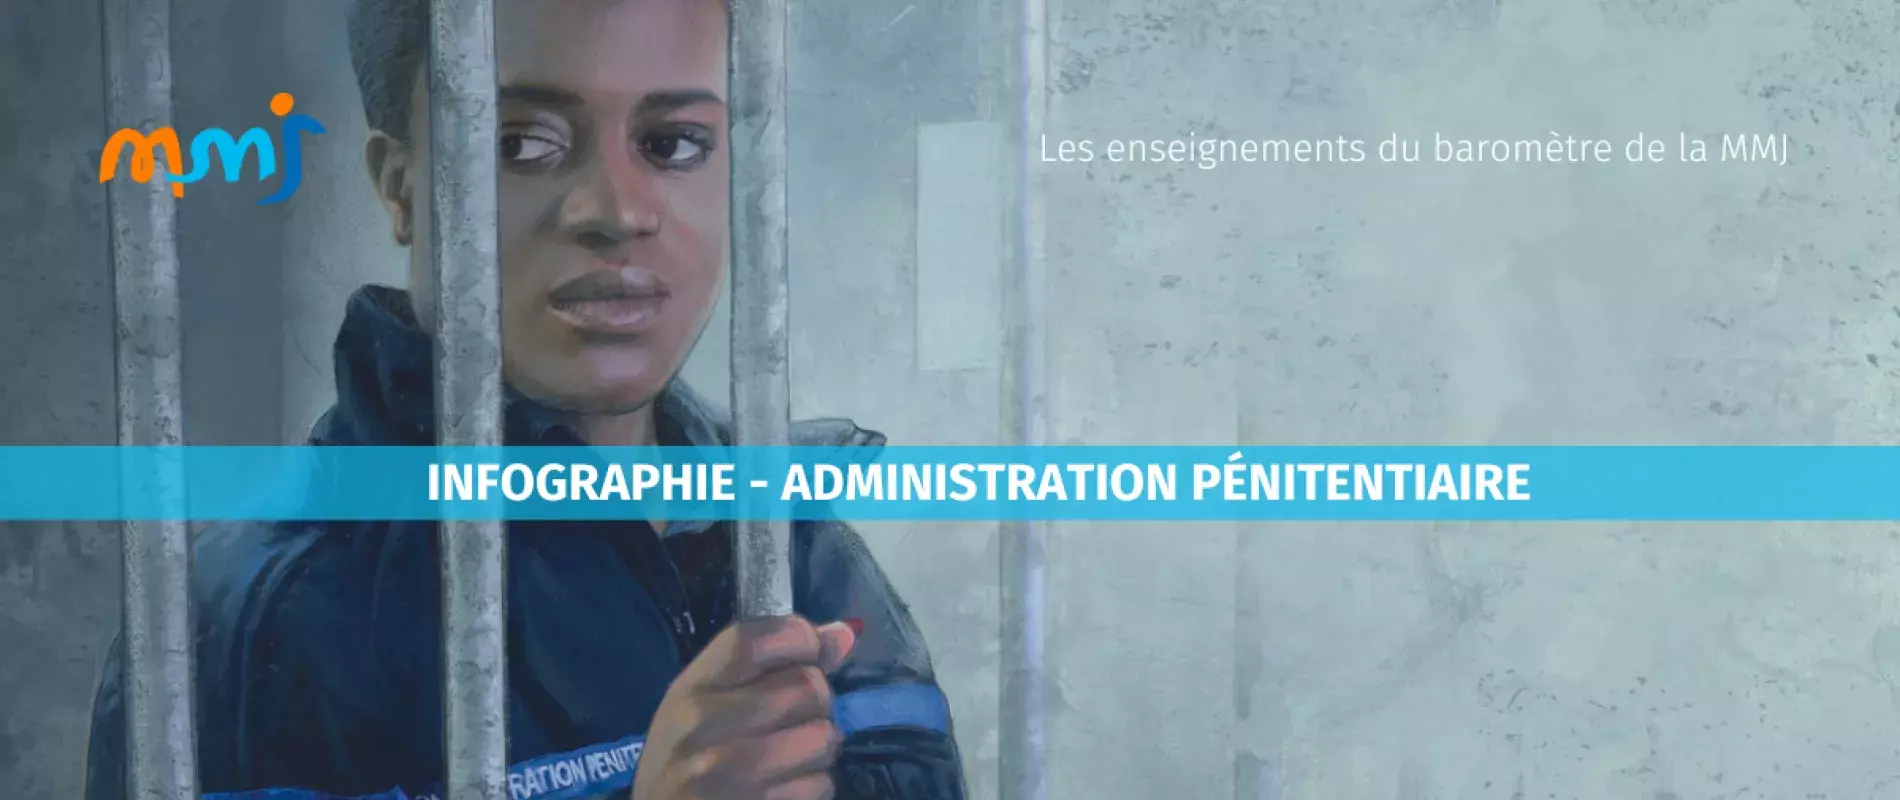 infographie_administration_penitentiaire_2022_barometre_sante_mmj